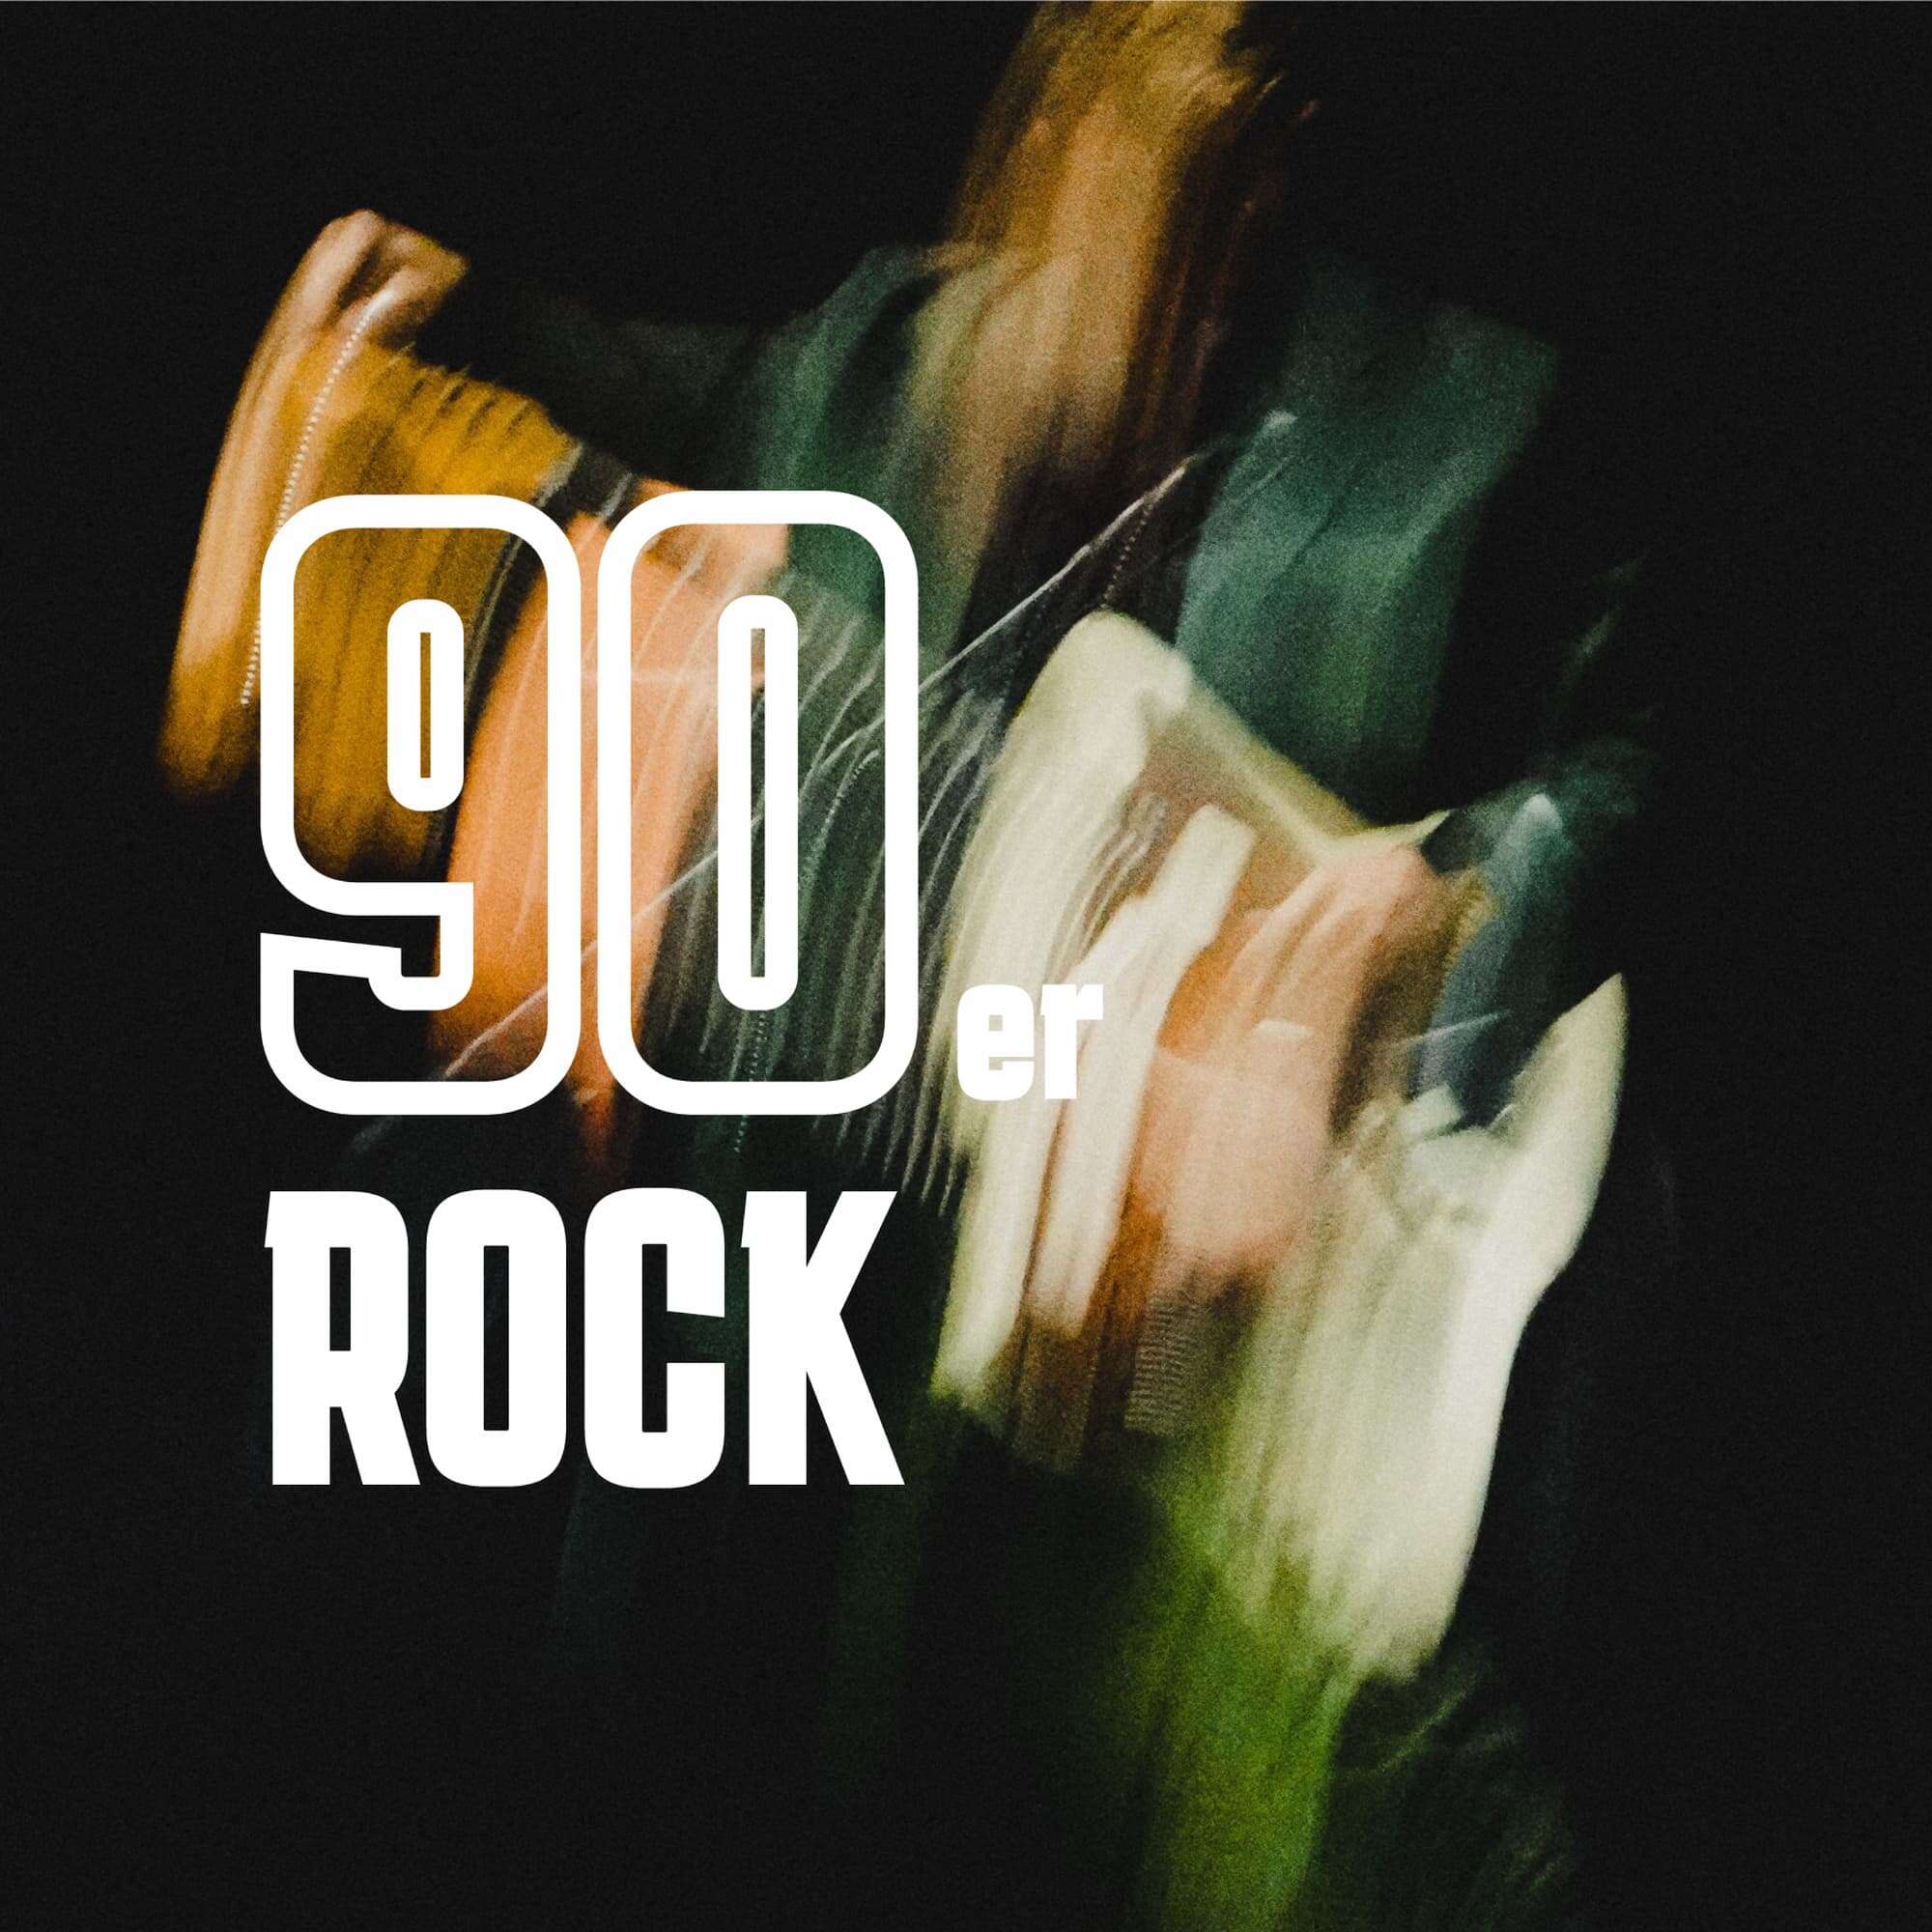 ROCK ANTENNE 90er Rock Cover